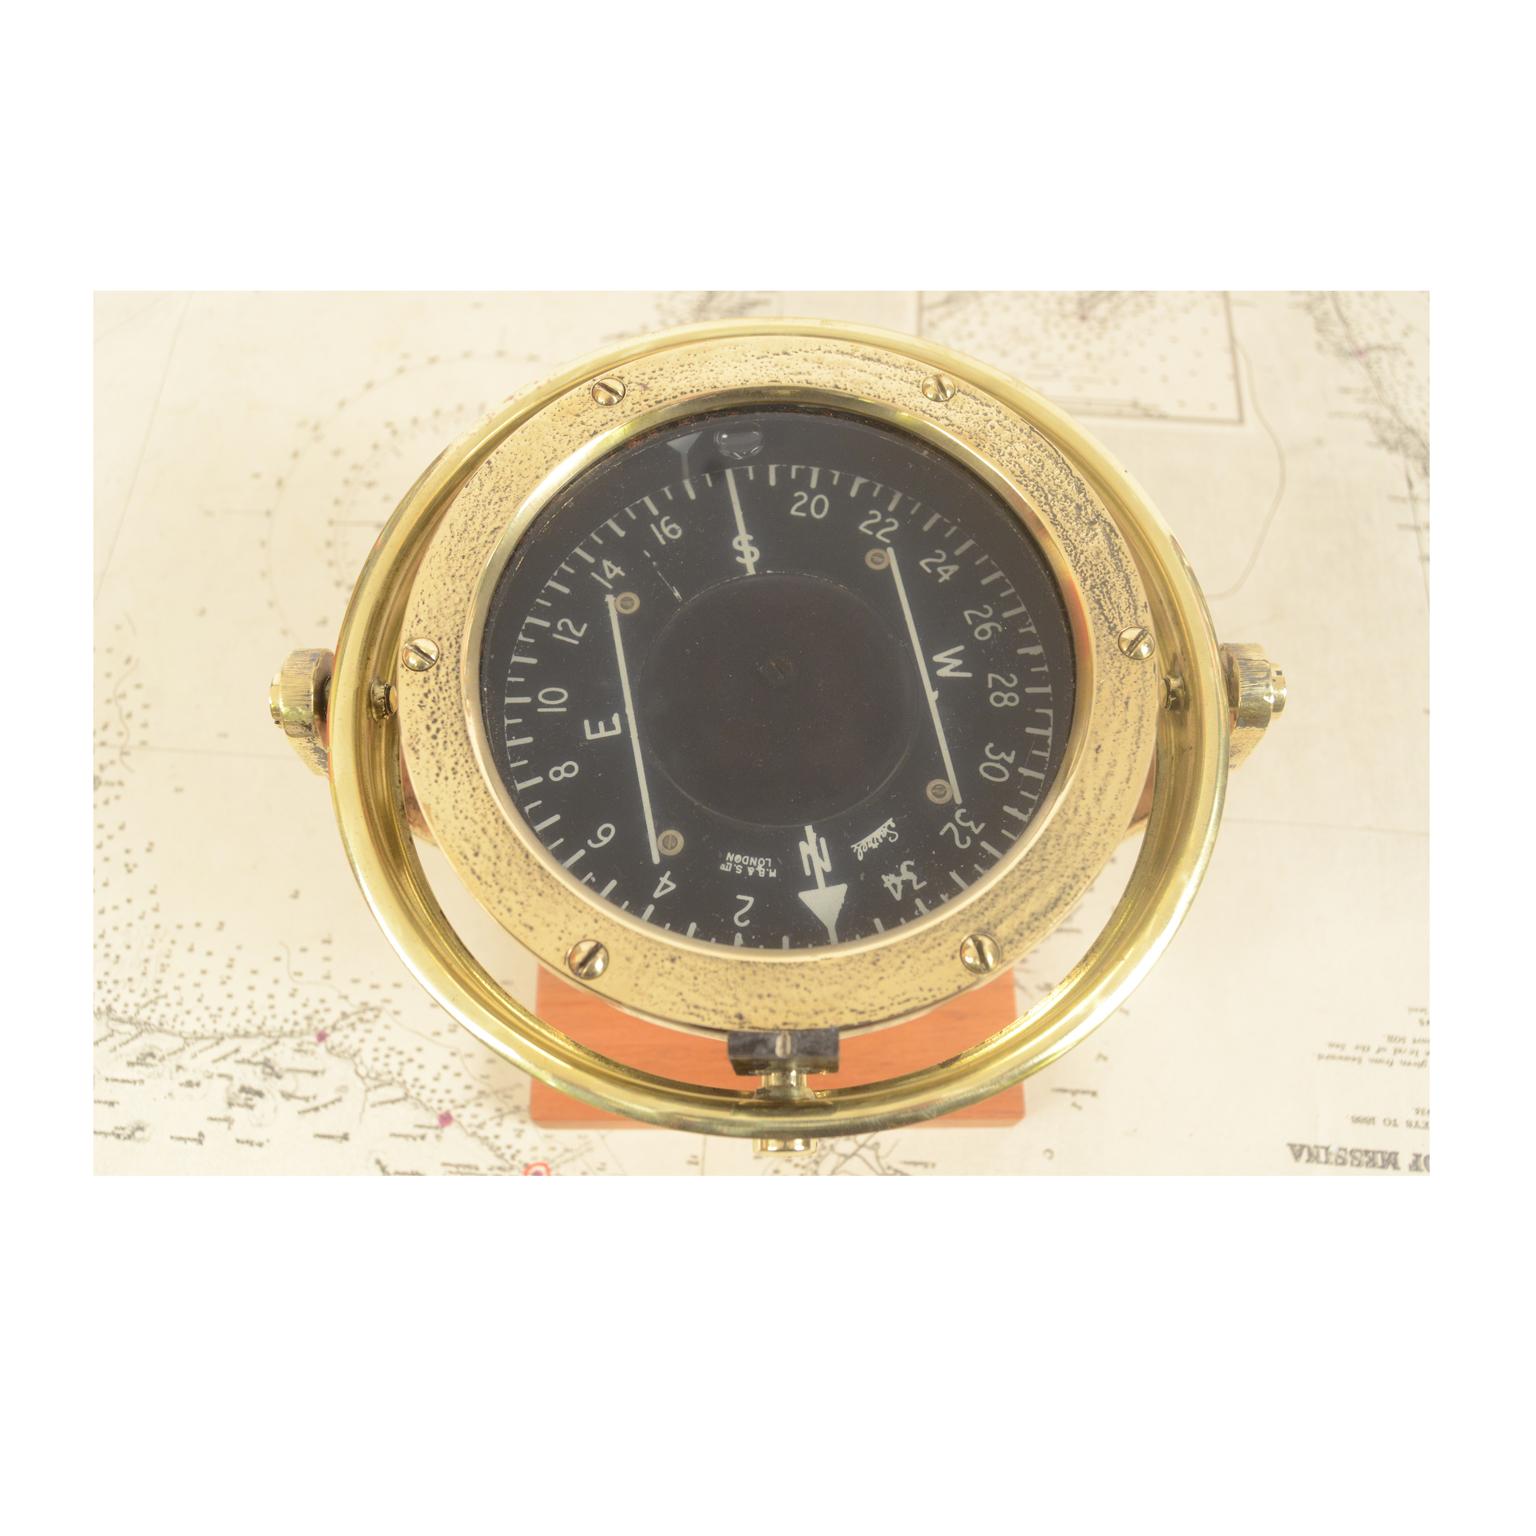 Sestrel Aeronautical Magnetic Compass Signed H B & S Ltd London on Wooden Base 3